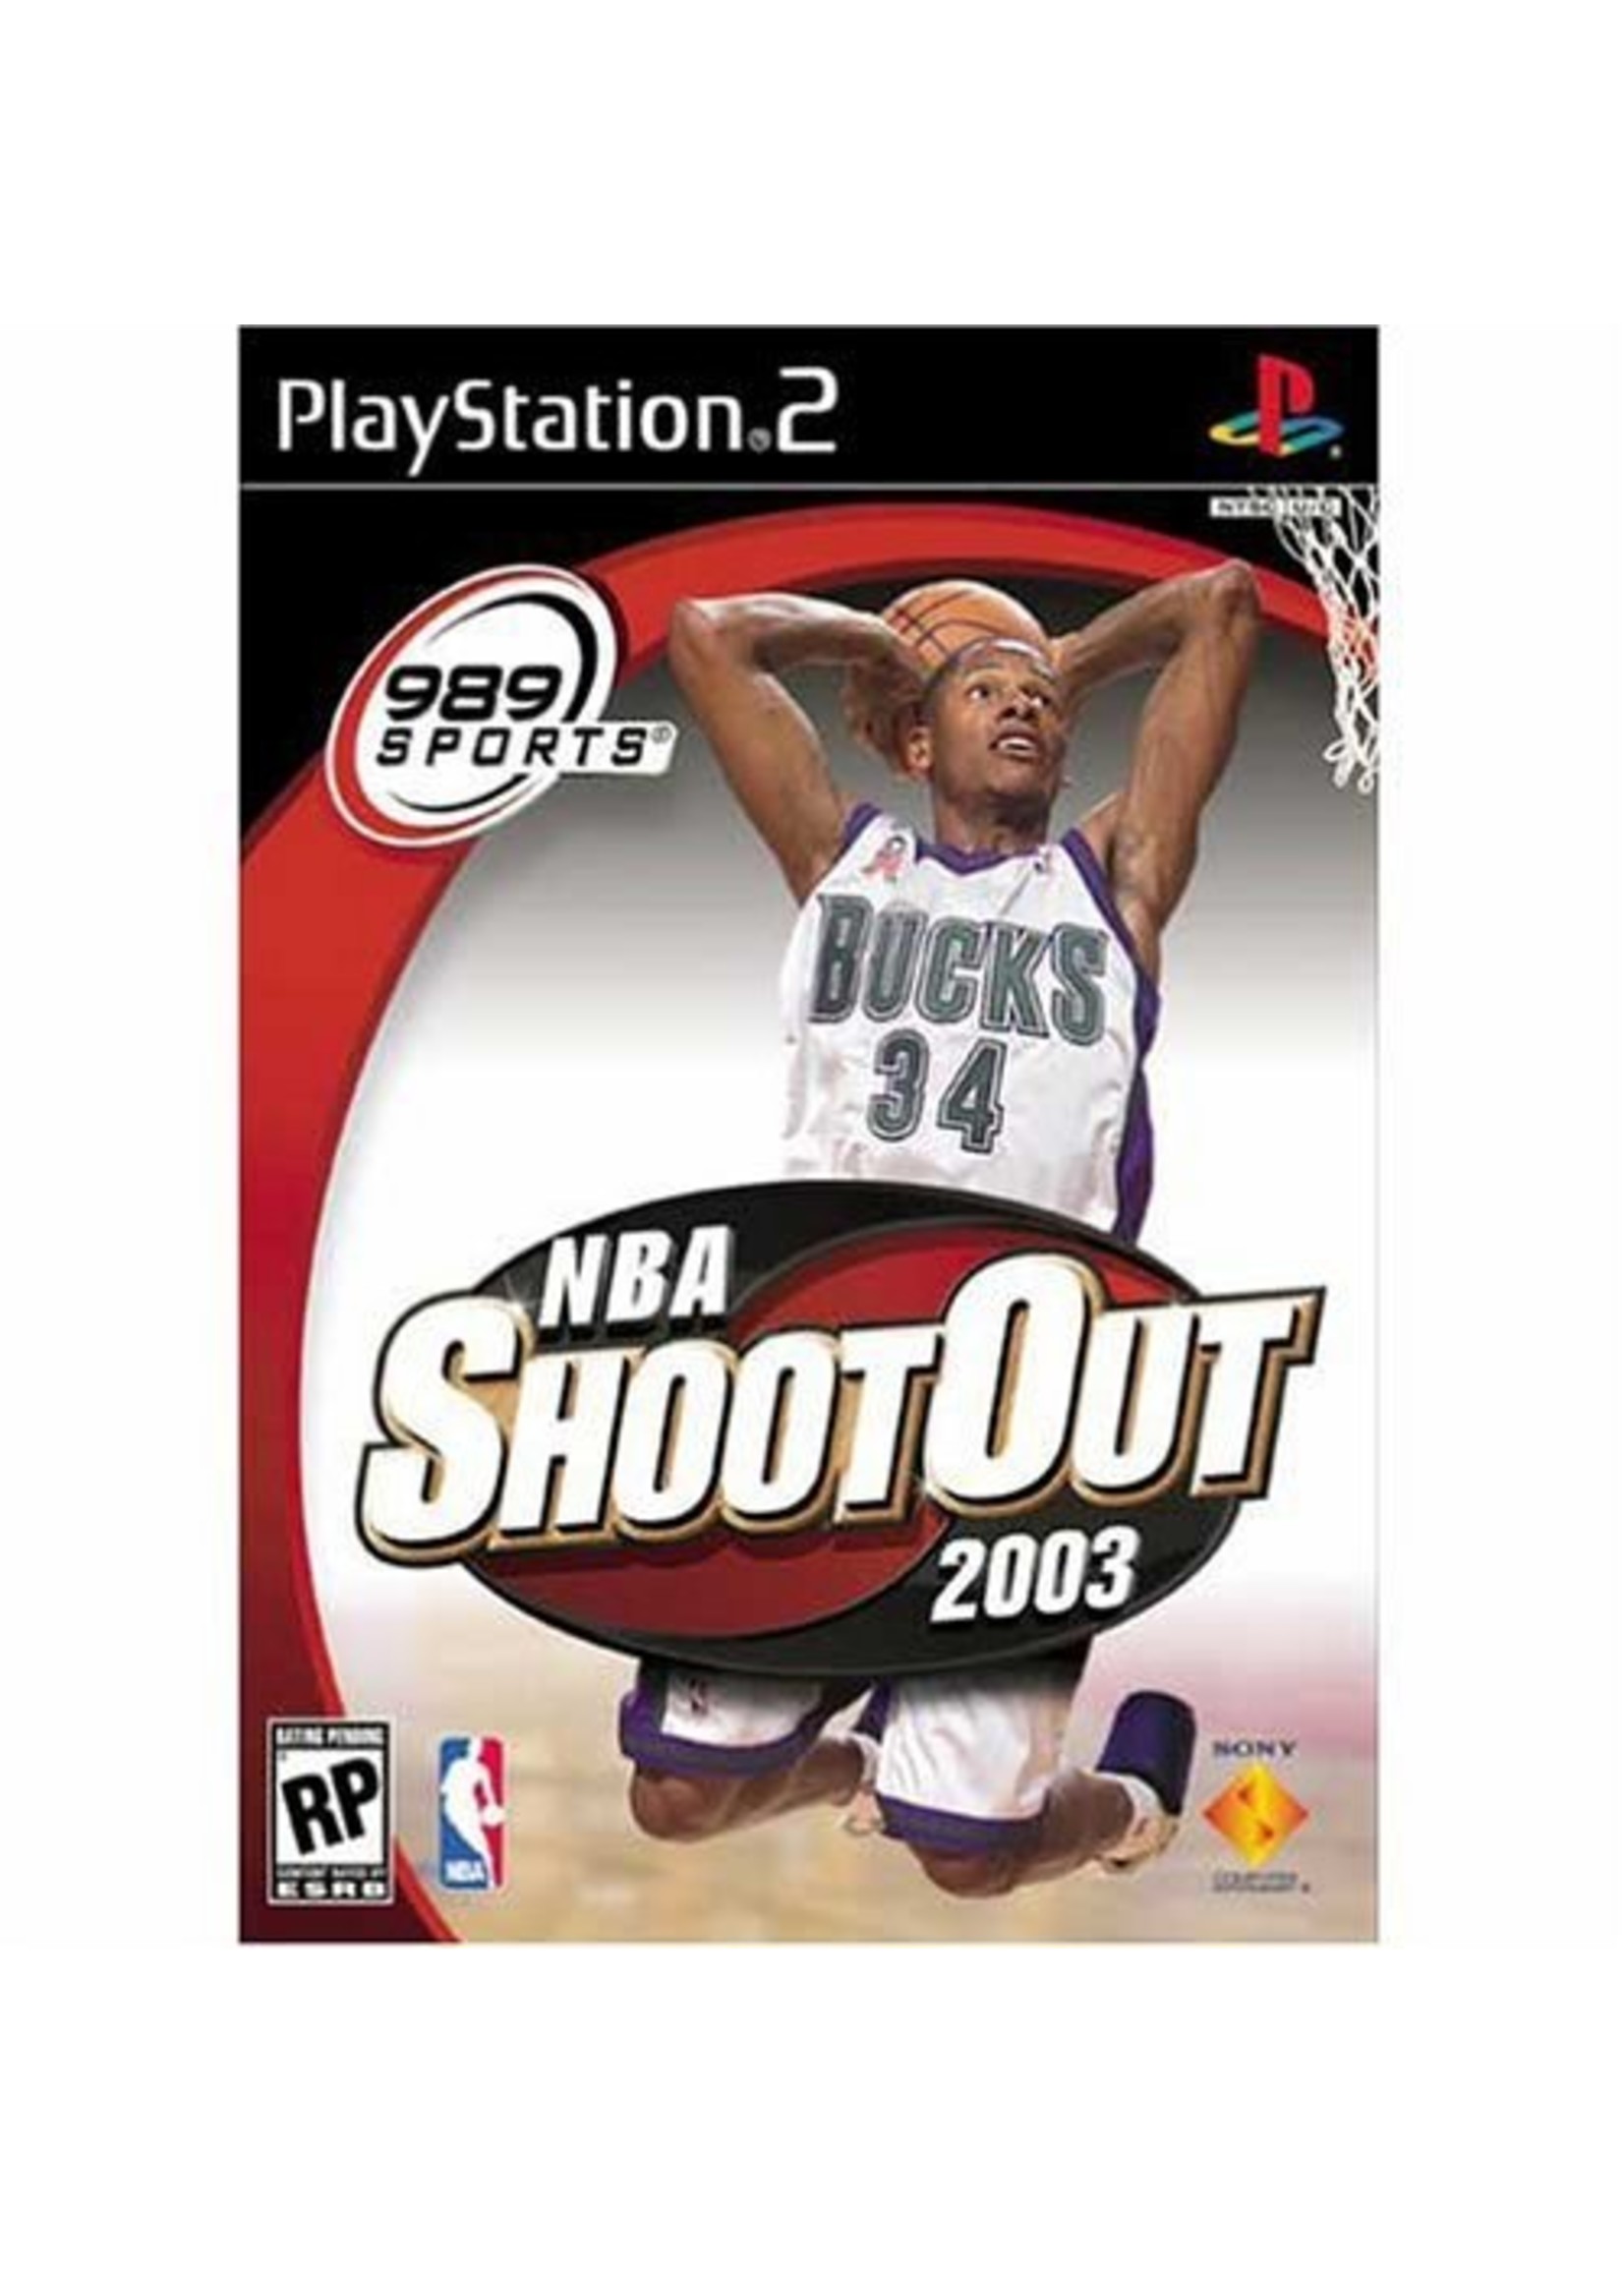 Sony Playstation 2 (PS2) NBA Shootout 2003